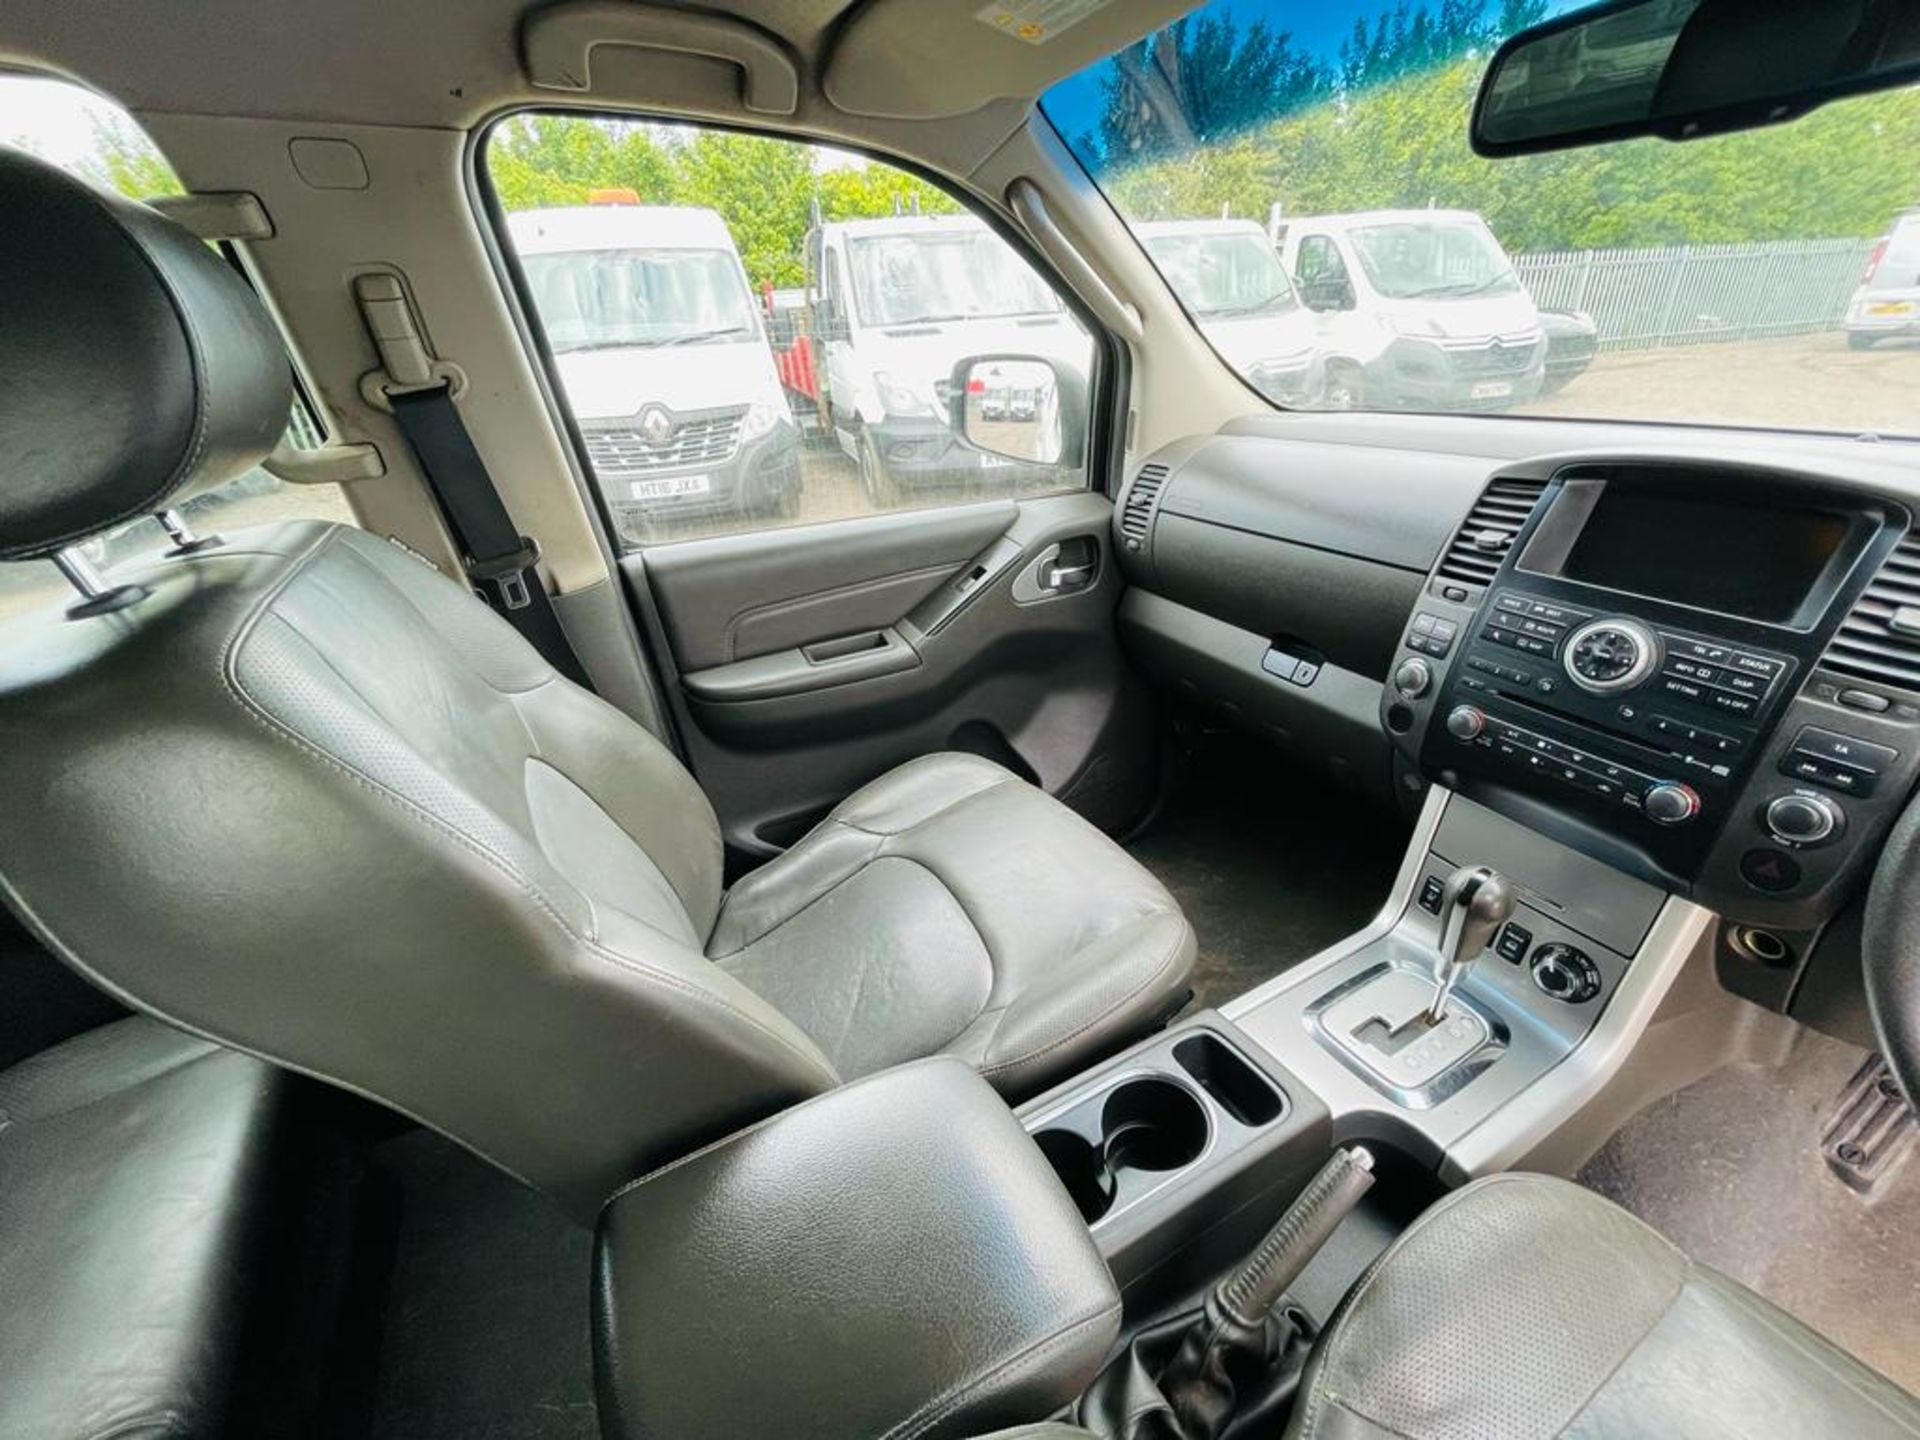 Nissan Navara 2.5 DCI Tekna Automatic 4WD 2012 '12 Reg' Sat Nav - A/C - Bluetooth - Image 11 of 25